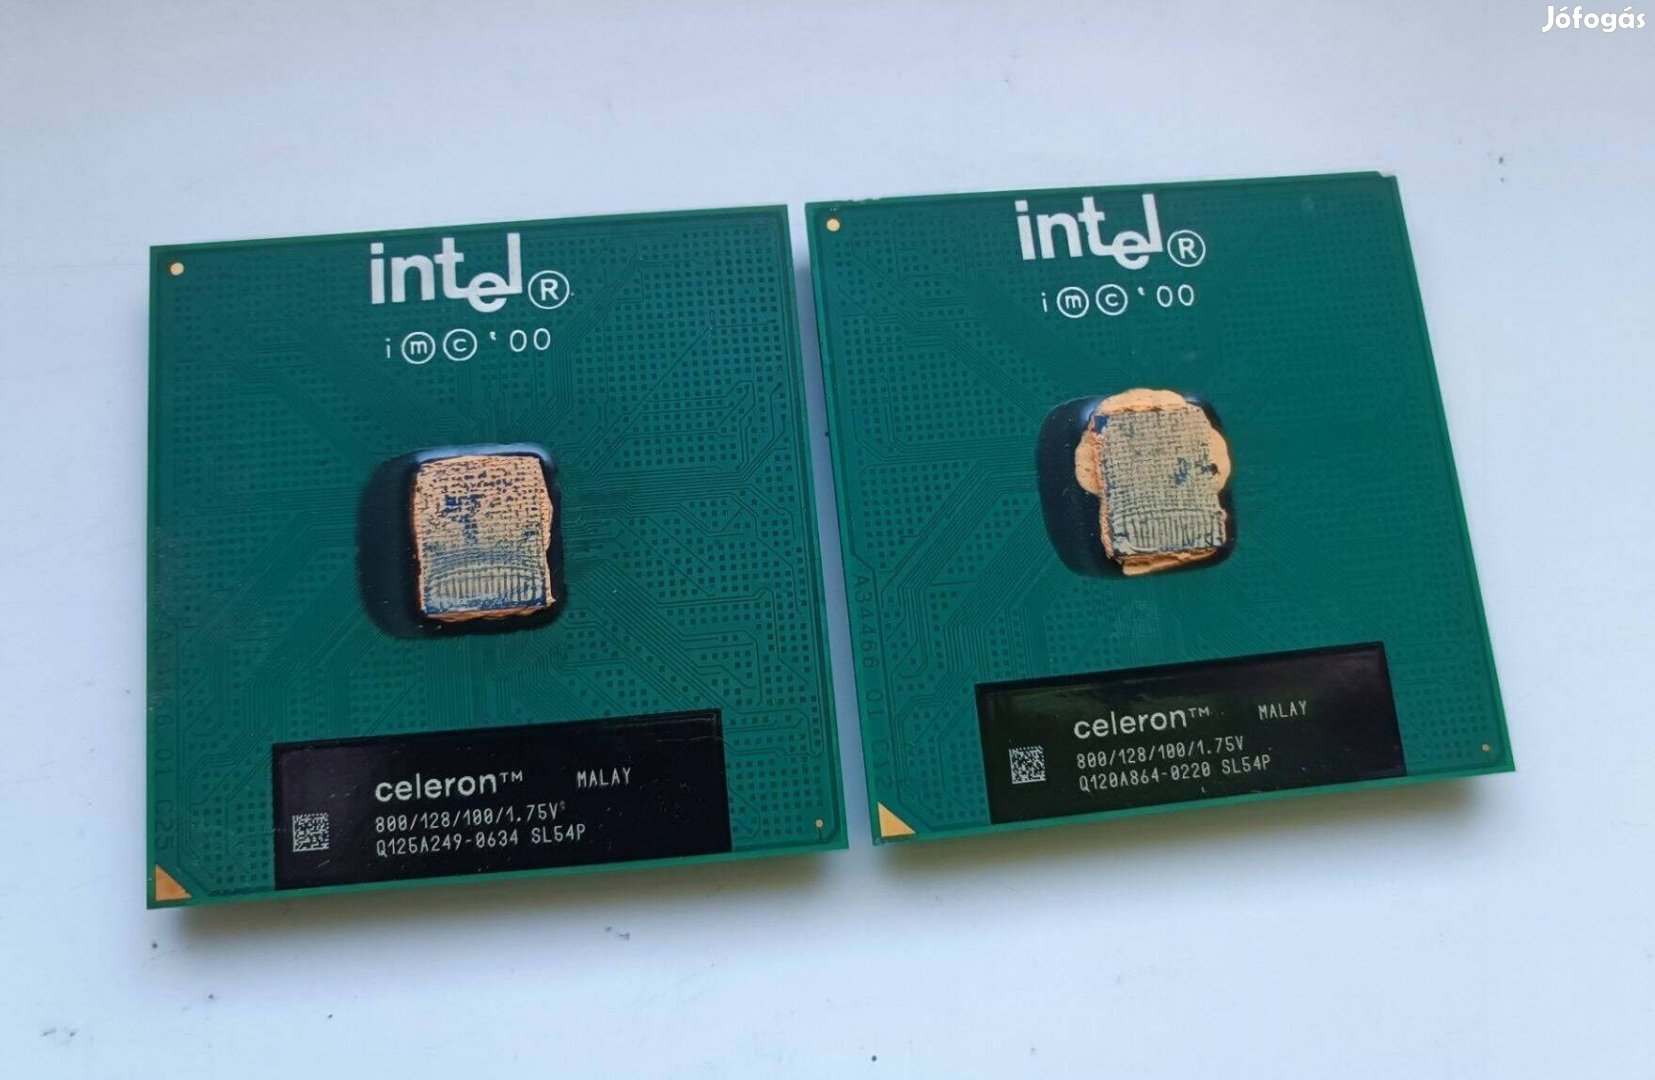 Intel Celeron 800 MHz CPU SL54P Coppermine